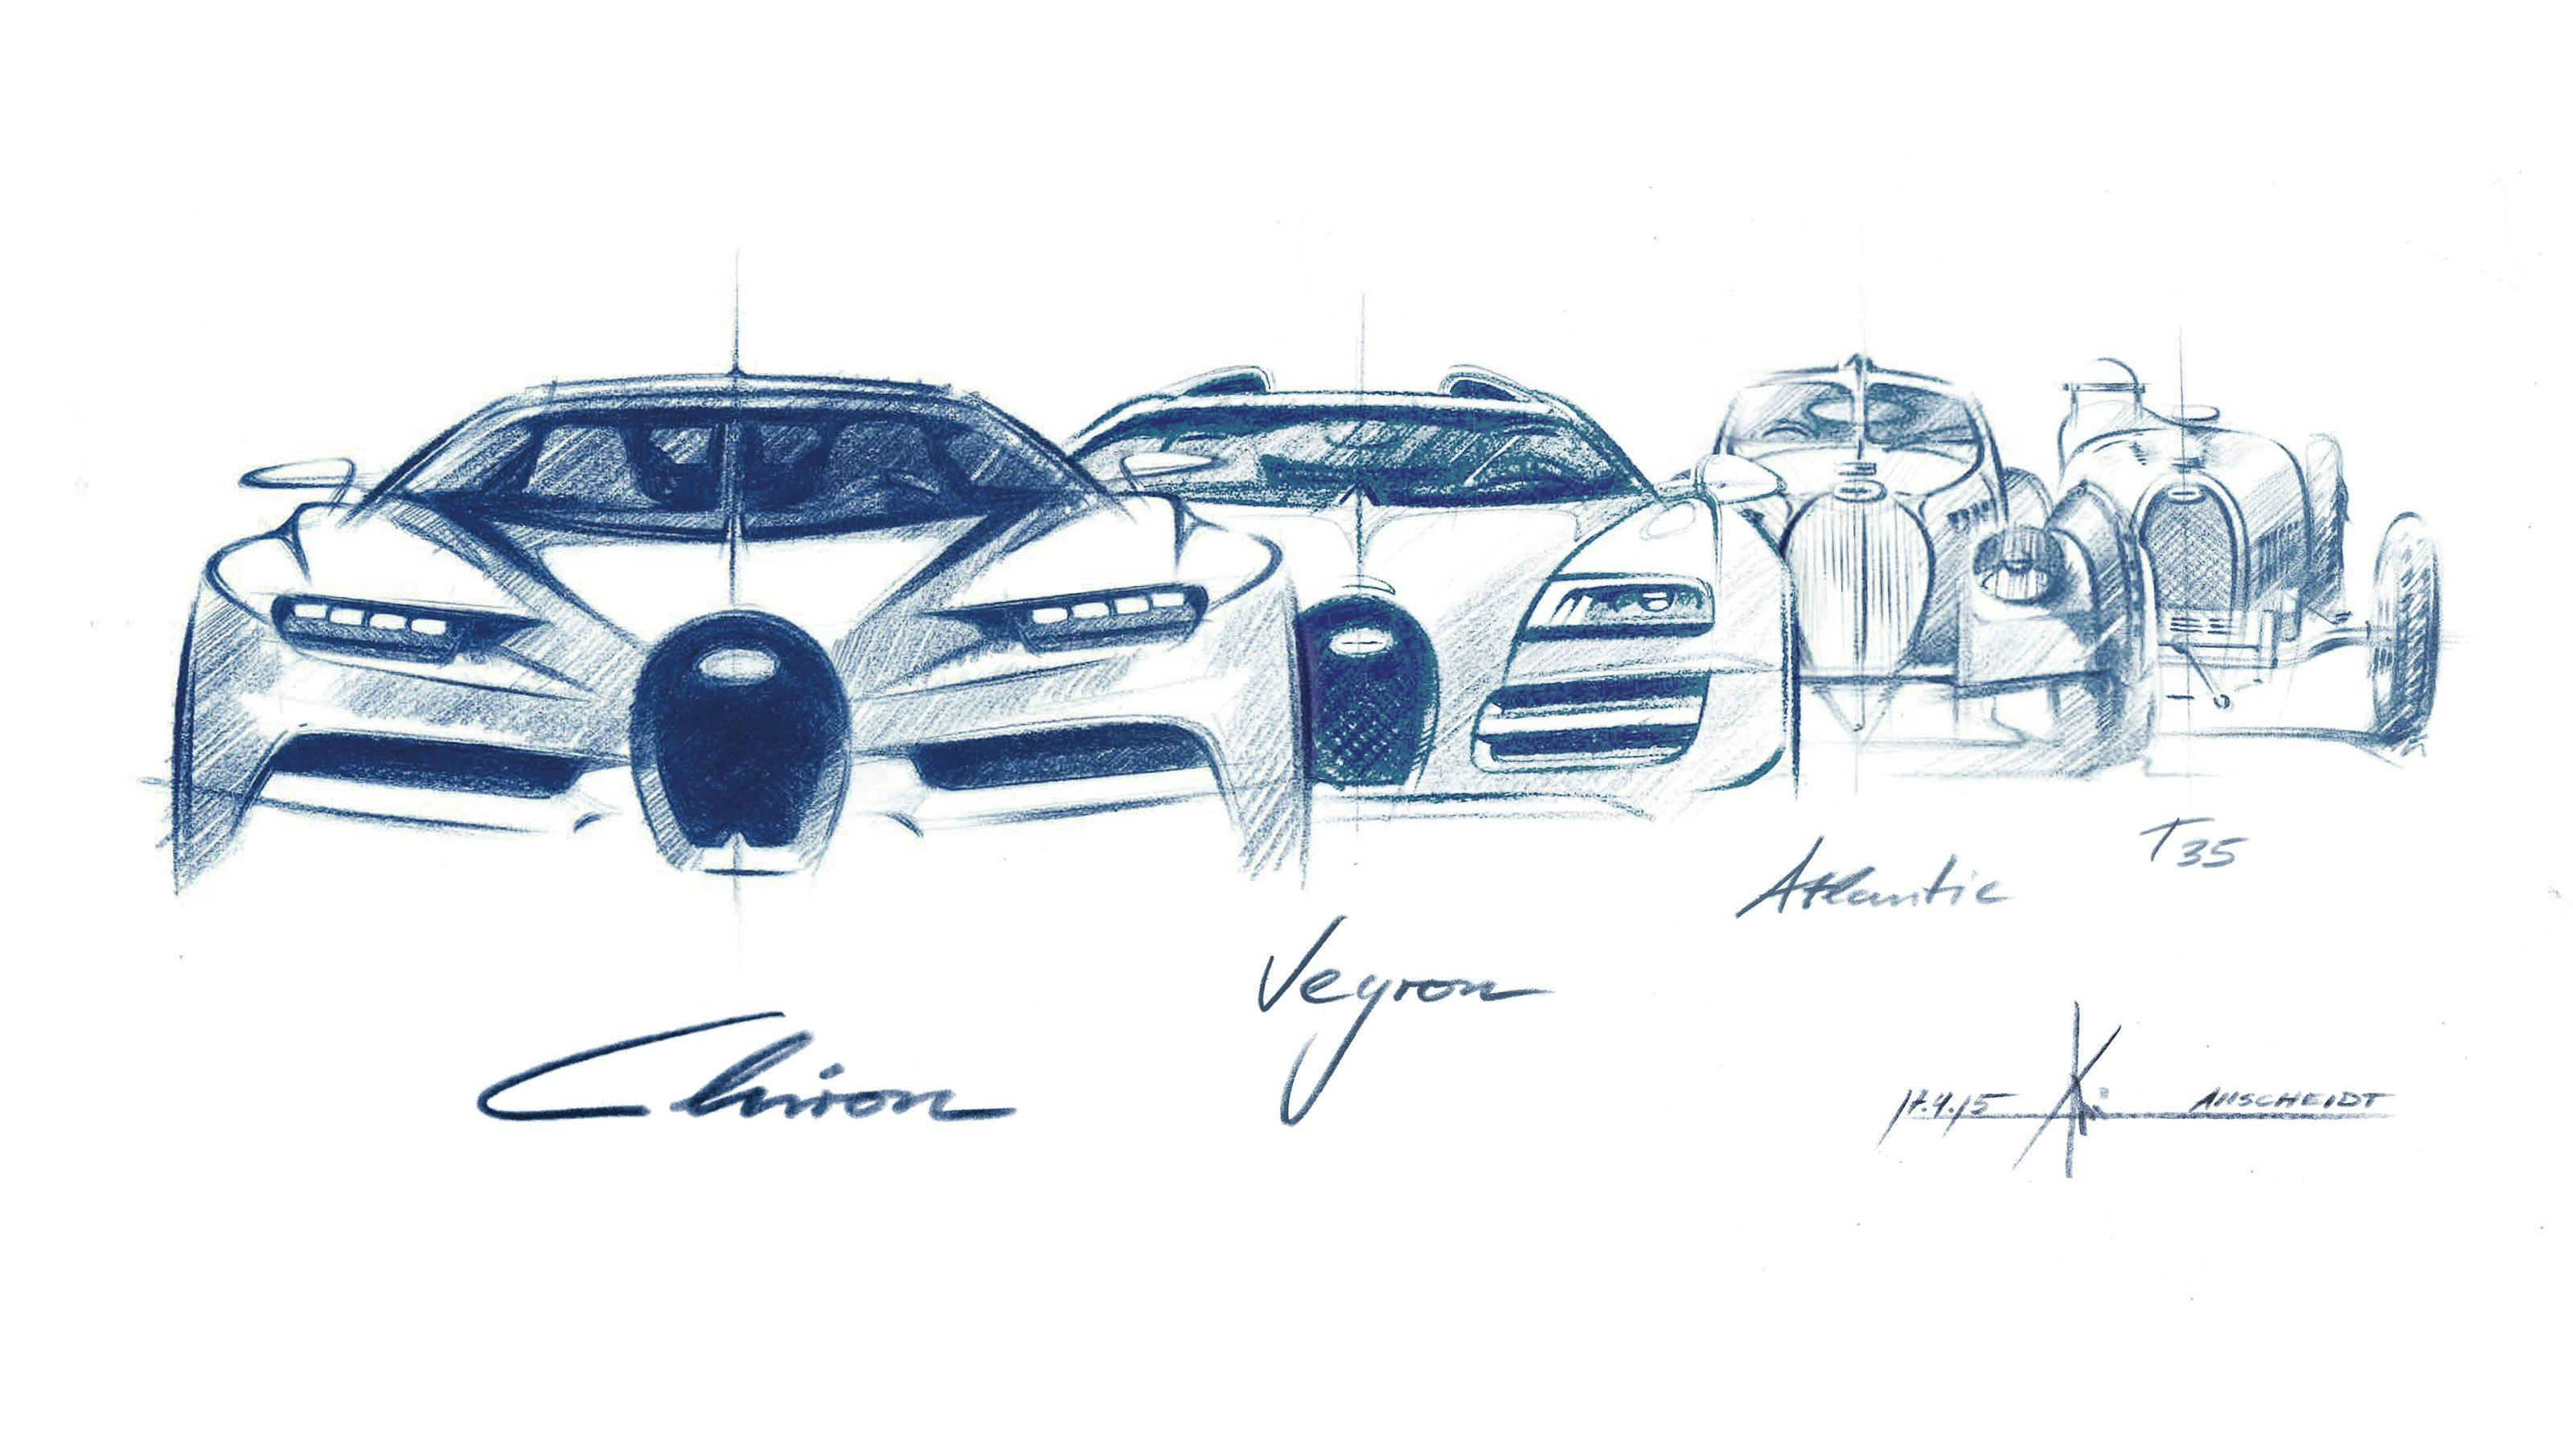 Généalogie des hypersportives signées Bugatti